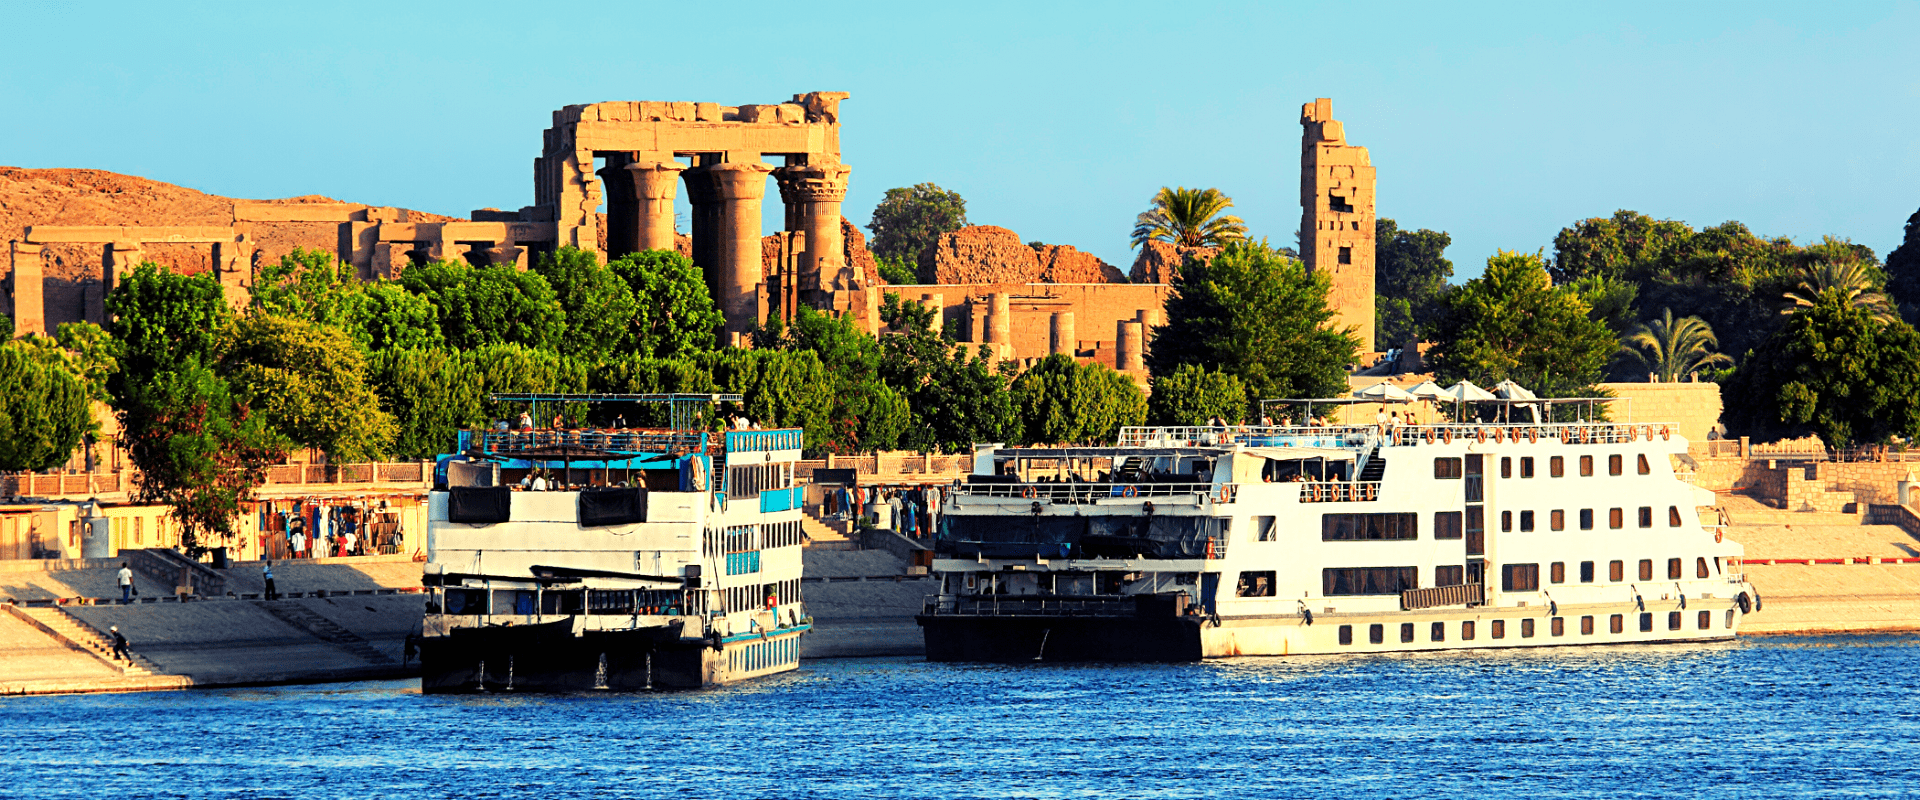 egypt to greece cruise